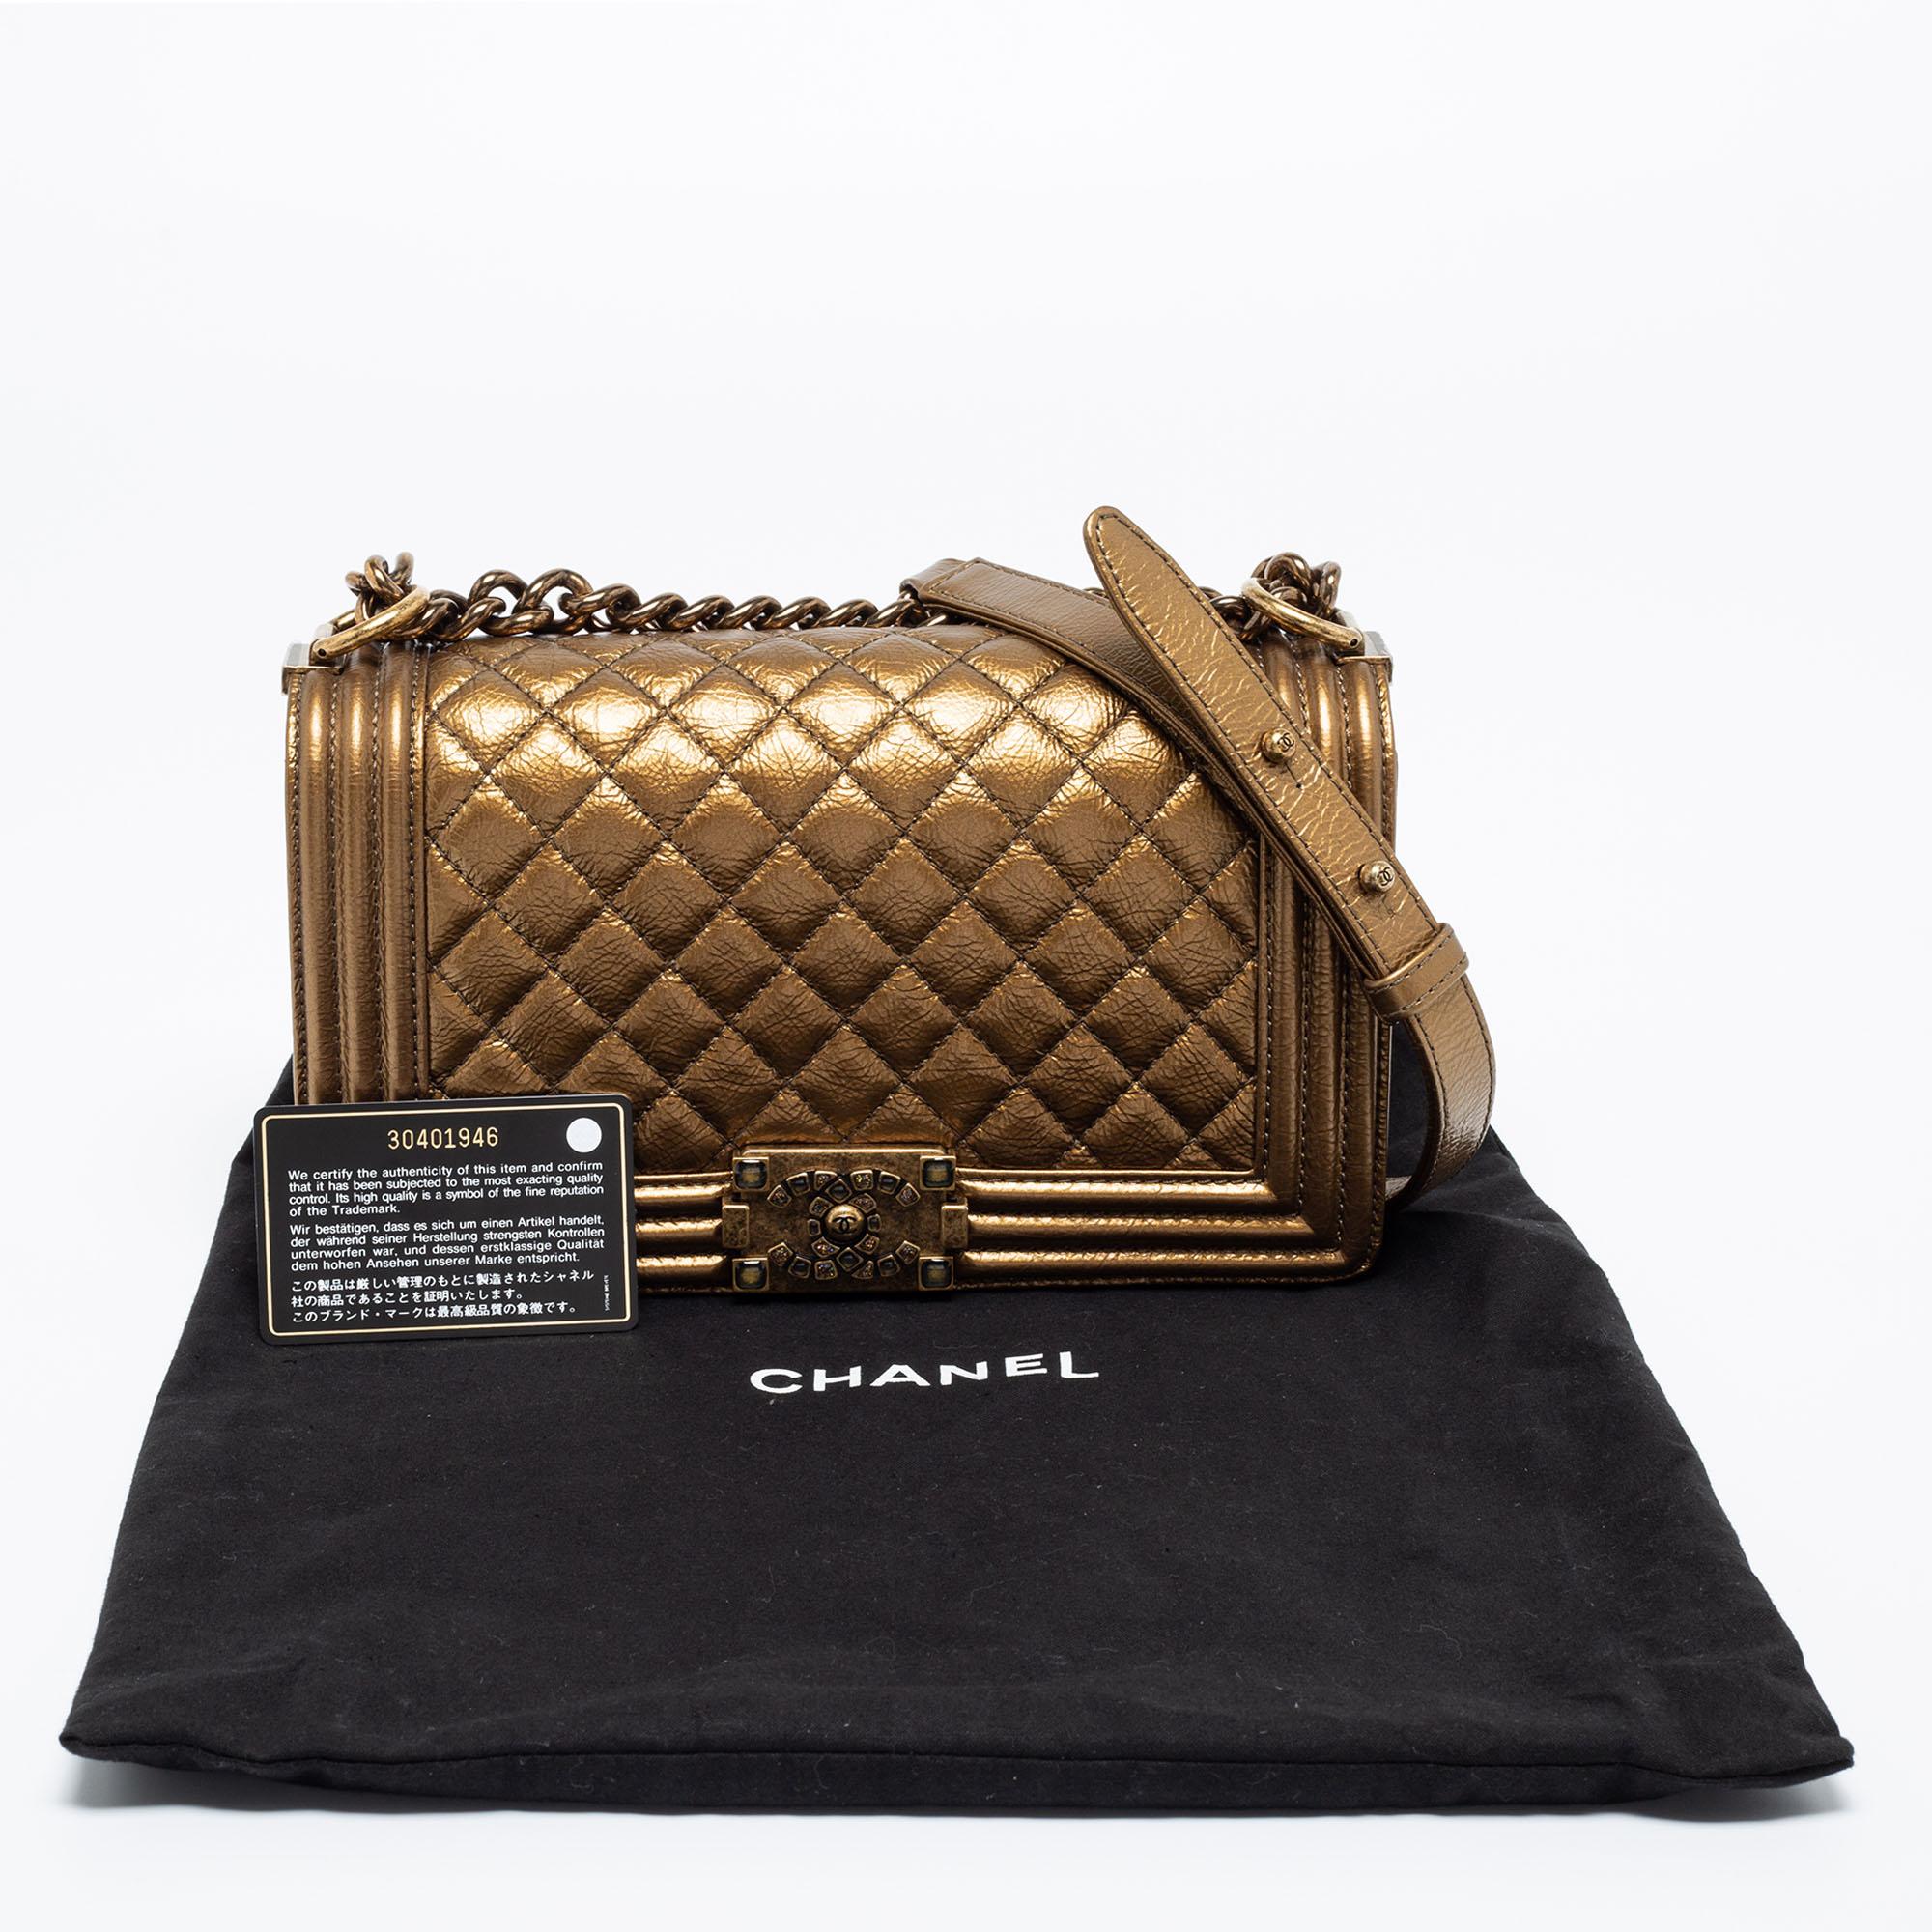 Chanel Metallic Bronze Quilted Leather Medium Boy Bag 6